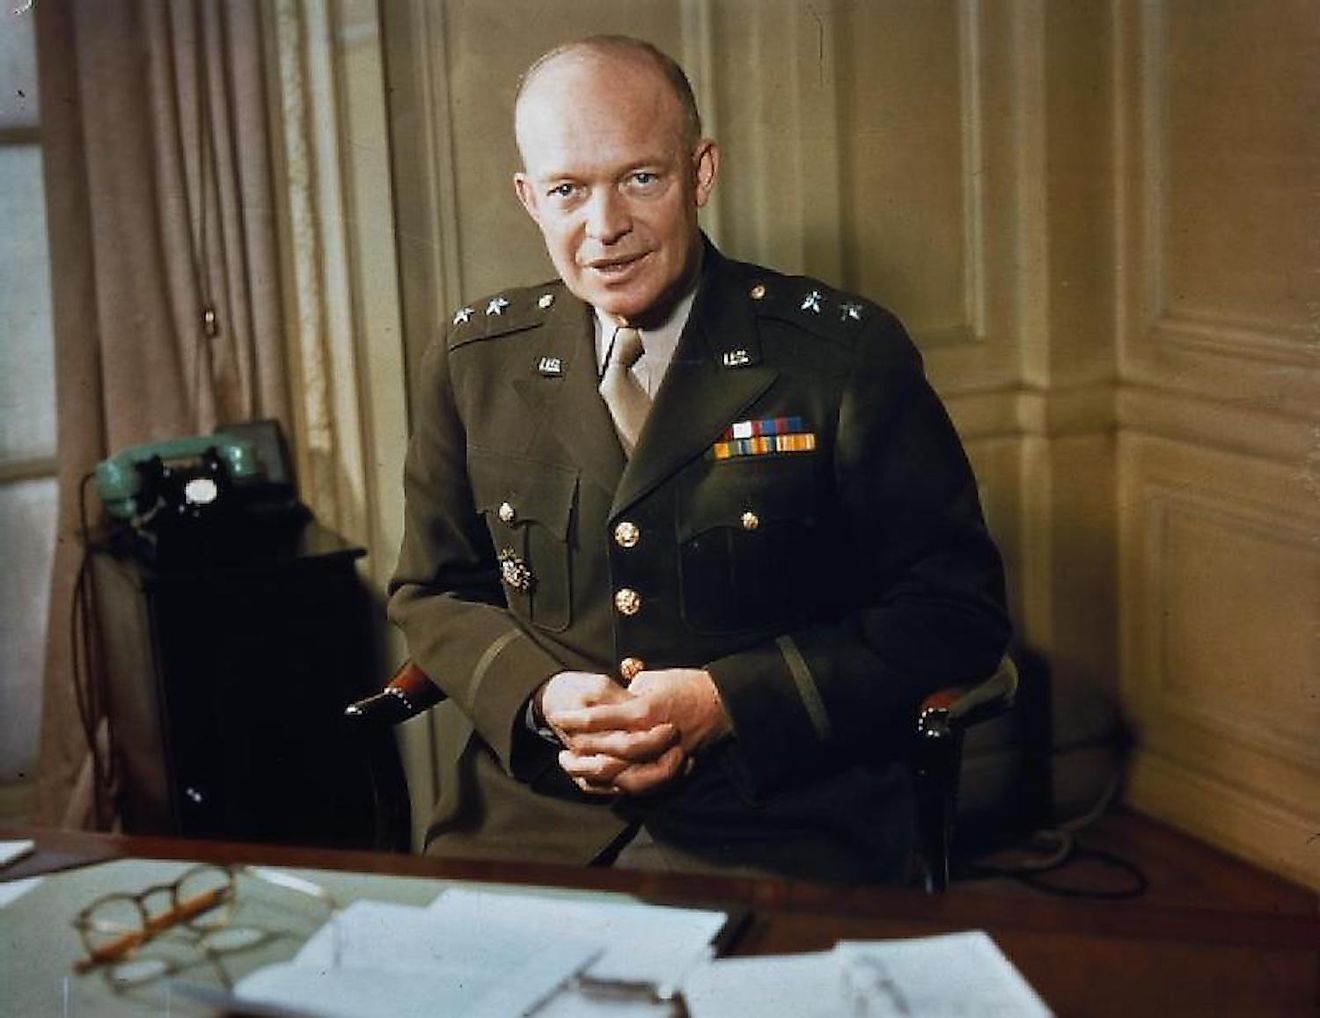 Eisenhower as a major general, 1942. Image credit: Official photographer / Public domain